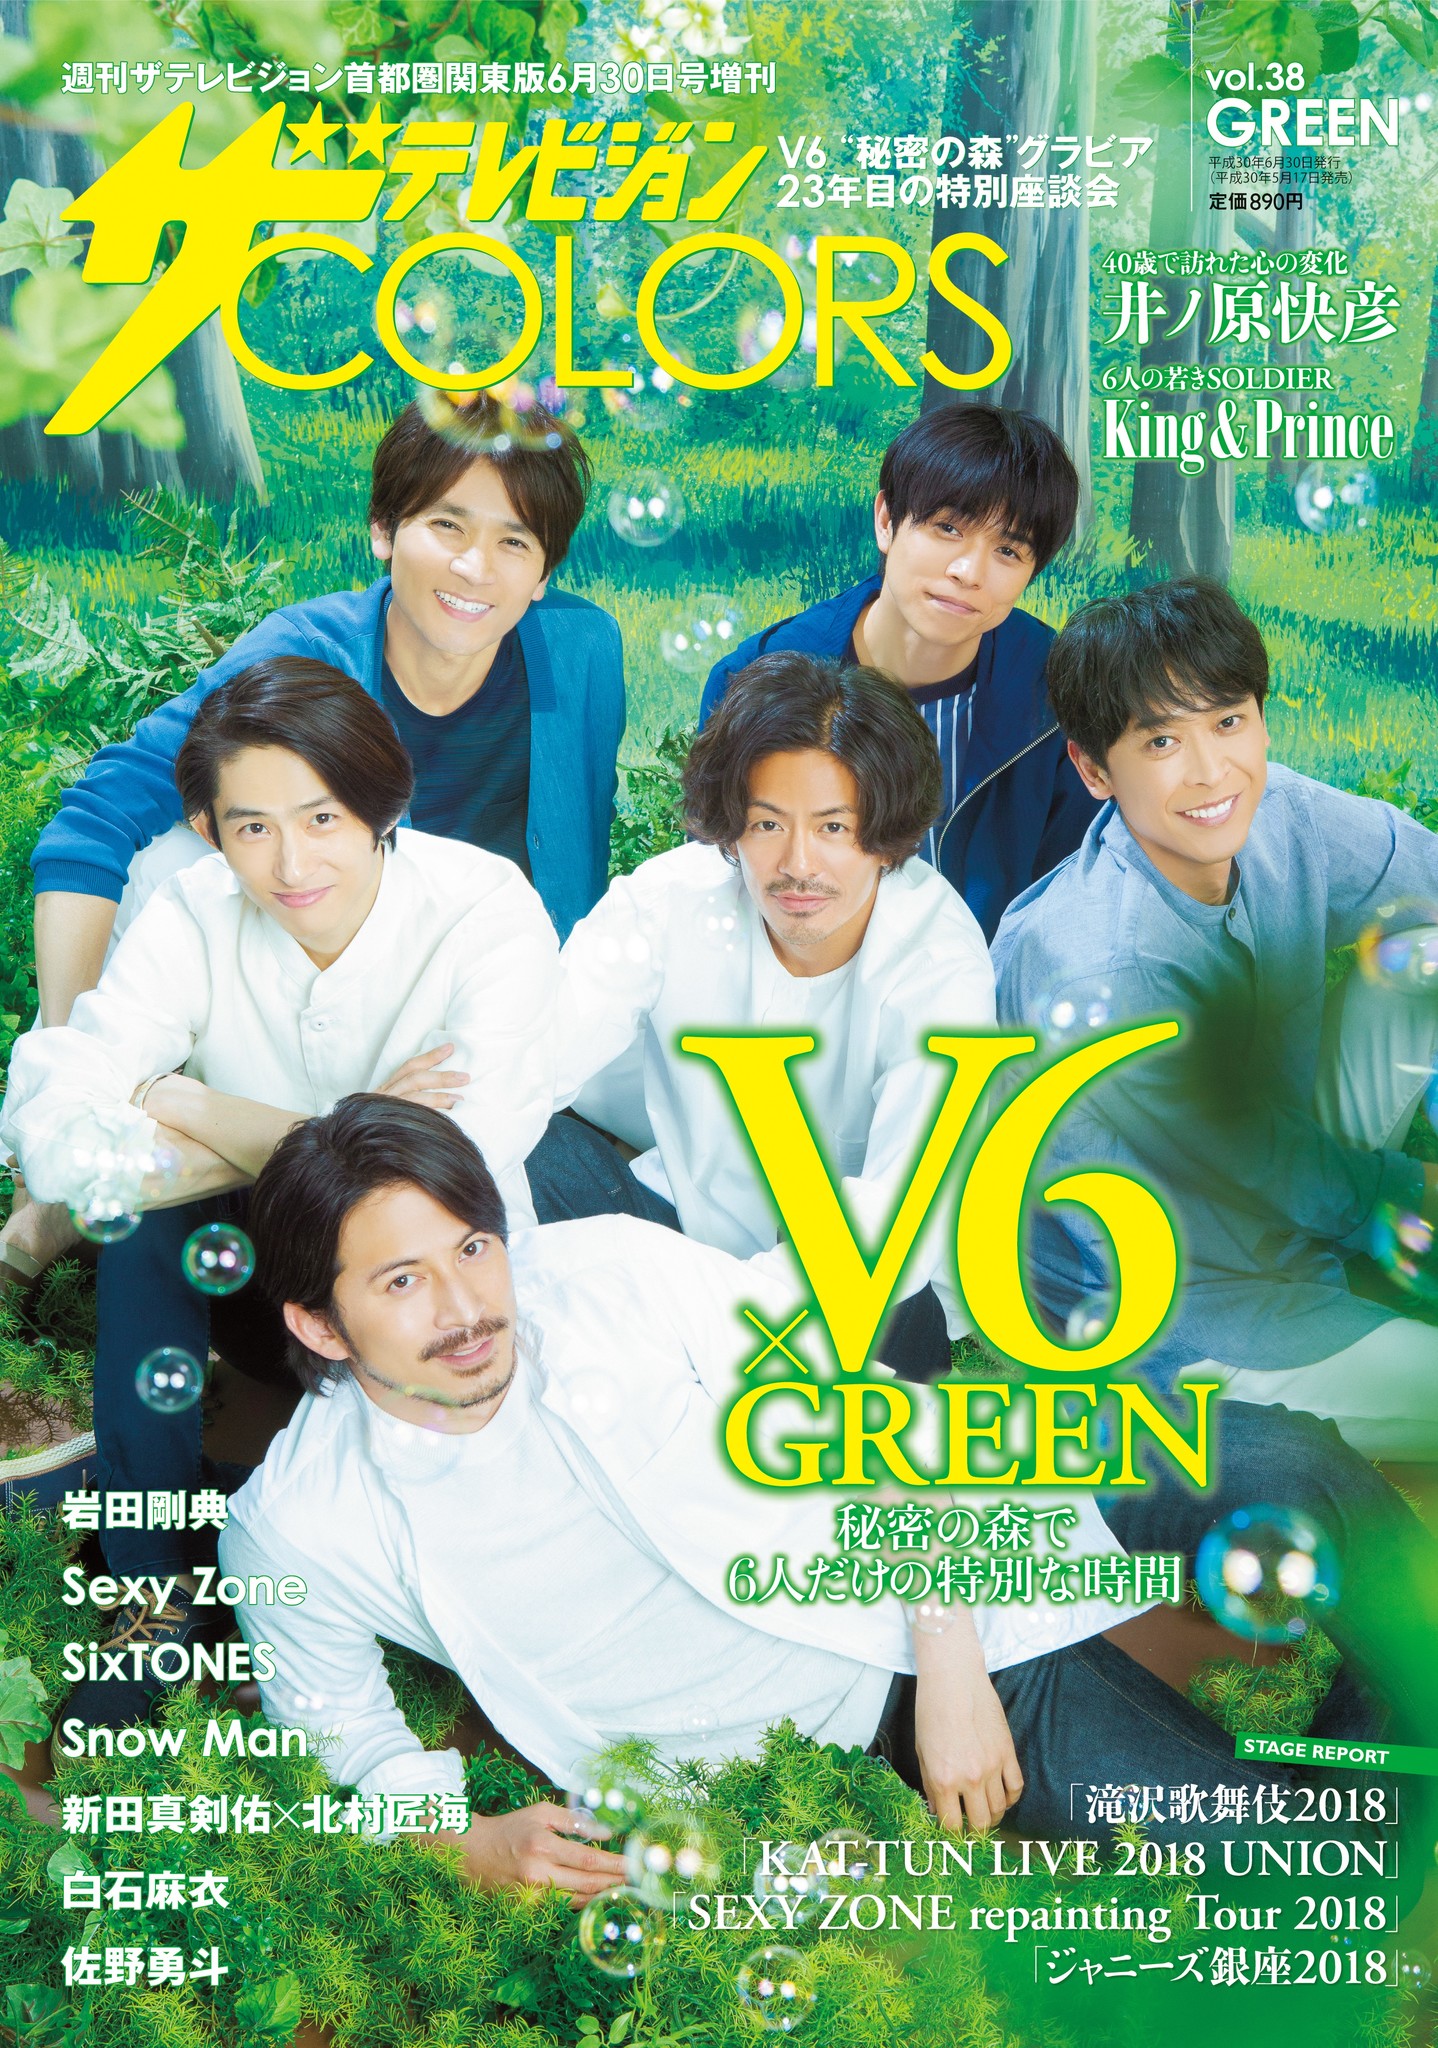 V6が表紙を飾る ザテレビジョンｃｏｌｏｒｓ Vol 38 Green 井ノ原快彦バースデーの5 17に発売 株式会社kadokawaのプレスリリース